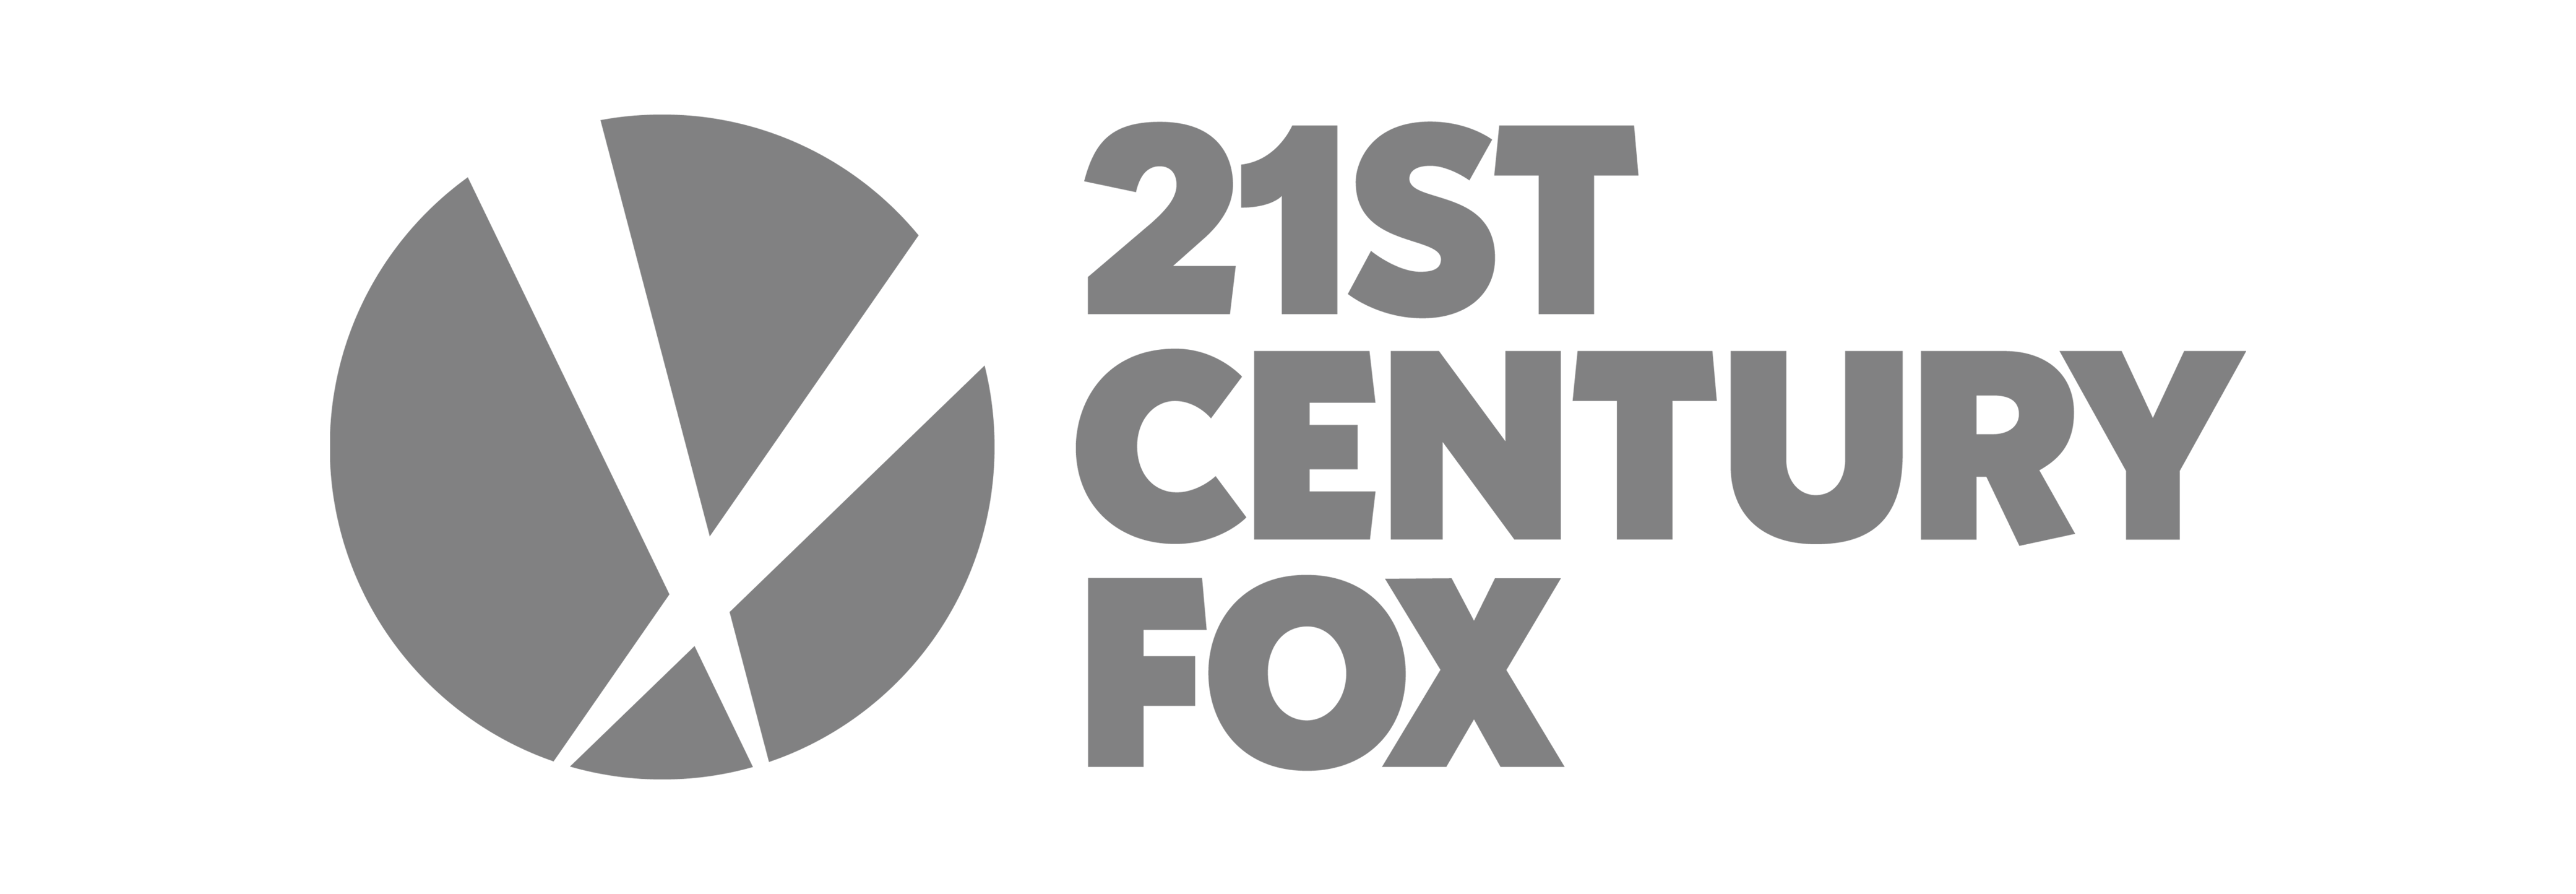 21stCenturyFox logo